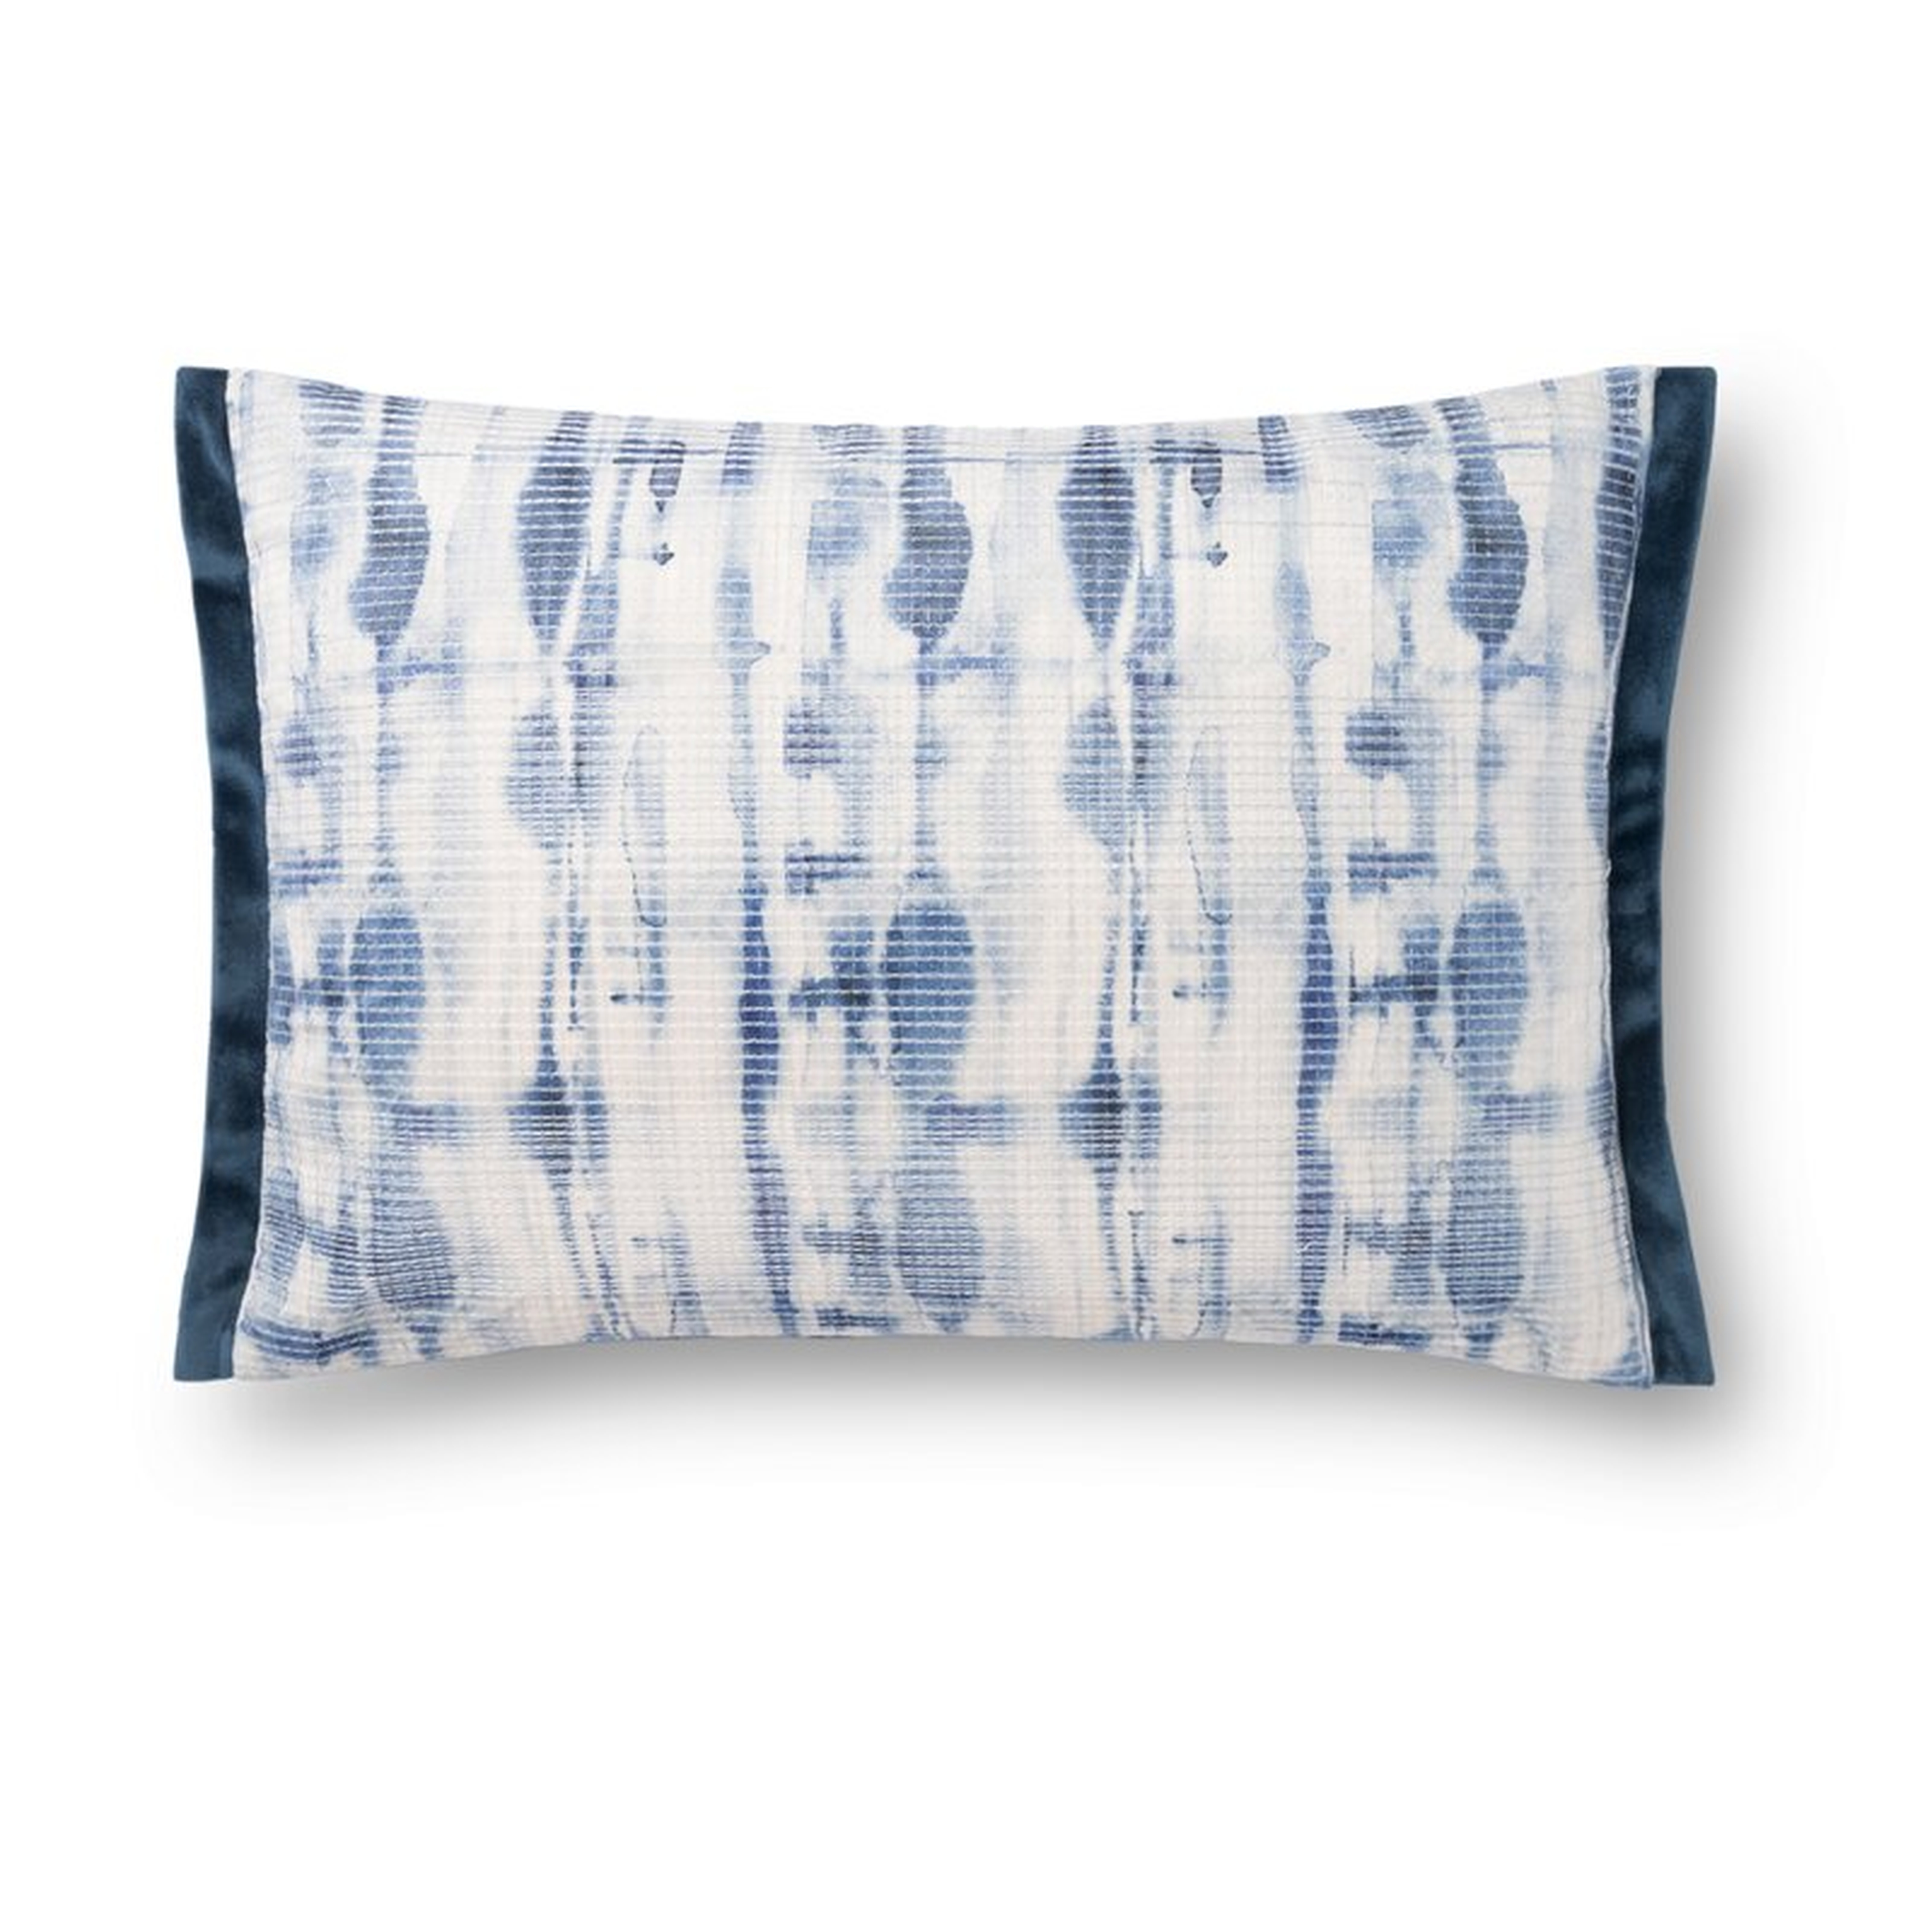 Abstract Lumbar Pillow Fill Material: Down, Color: Blue - Perigold